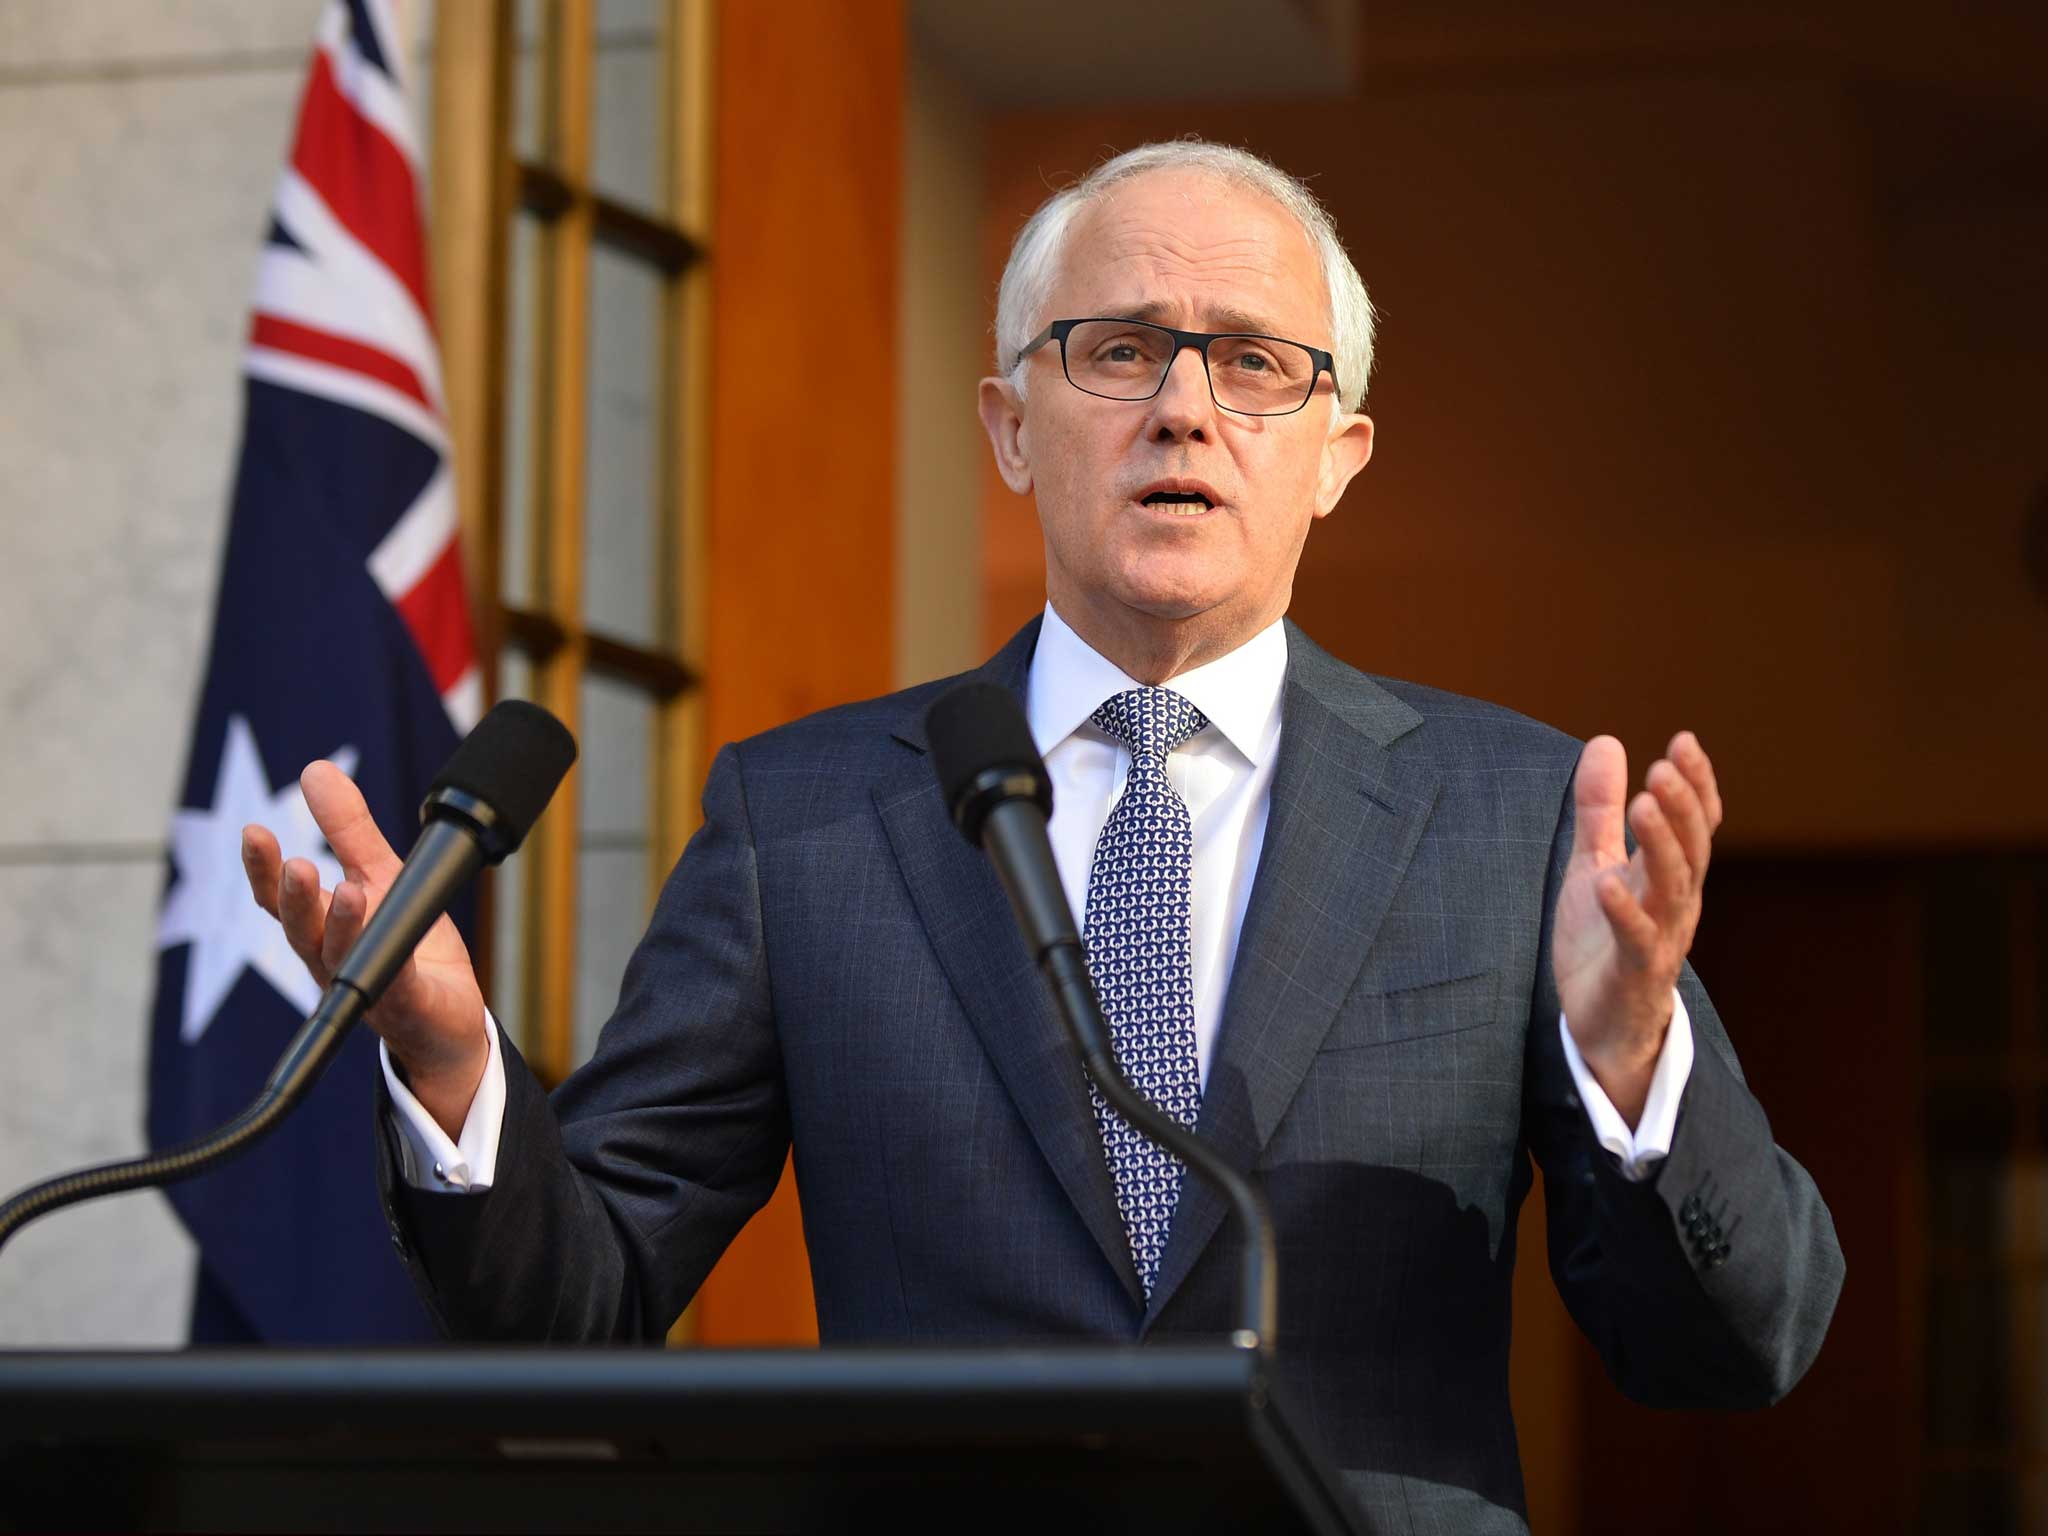 UK-educated world leaders include Australia's PM Malcolm Turnbull